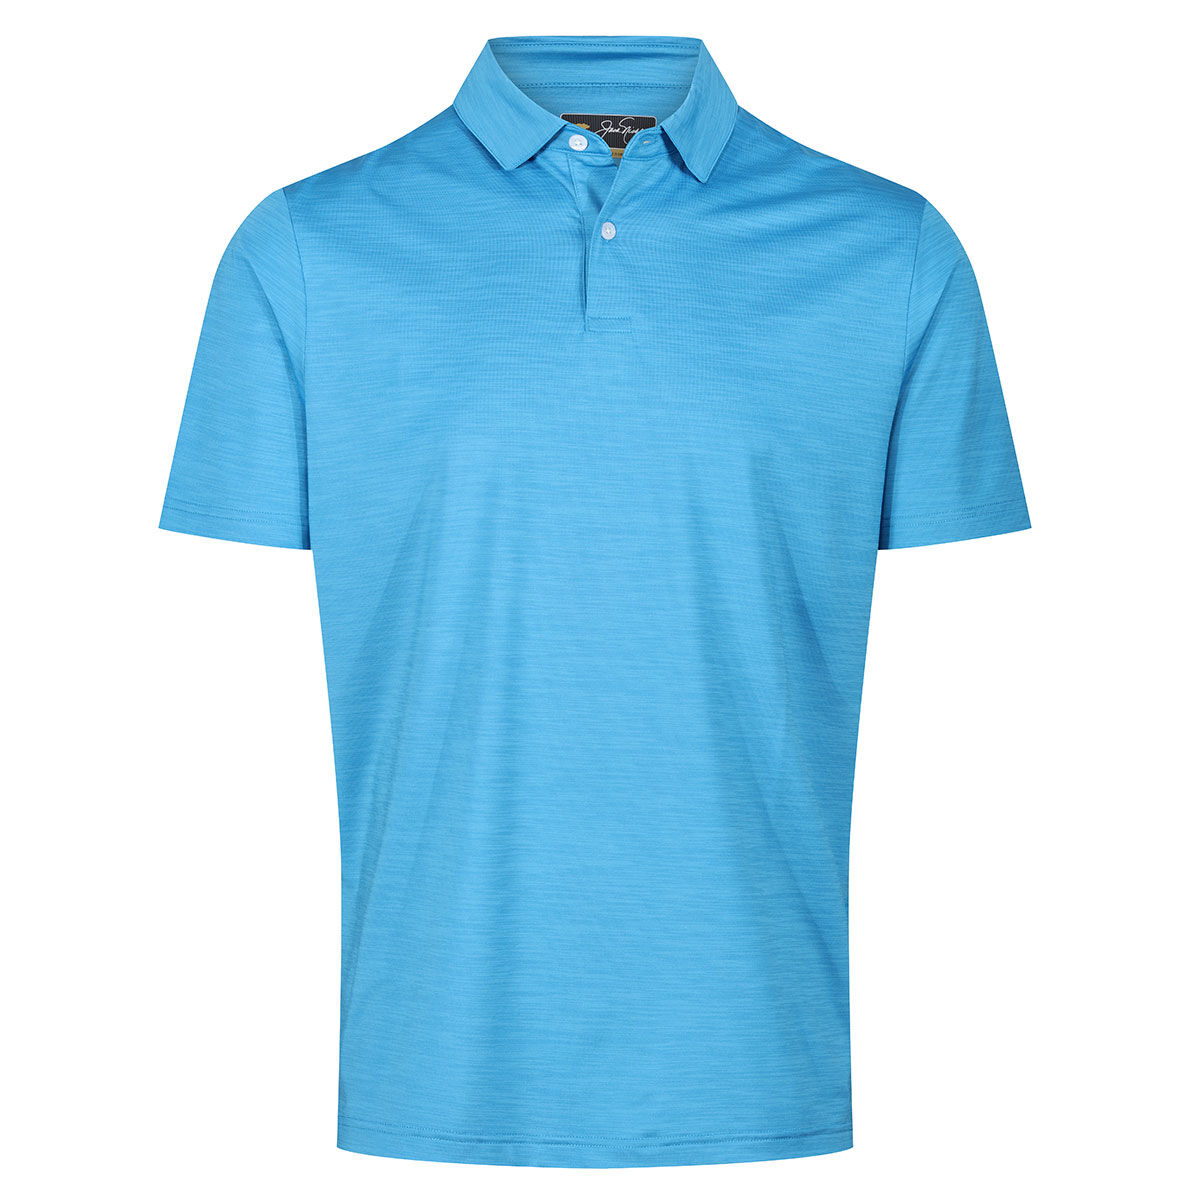 Jack Nicklaus Men’s Tonal Golf Polo Shirt, Mens, Light blue, Small | American Golf